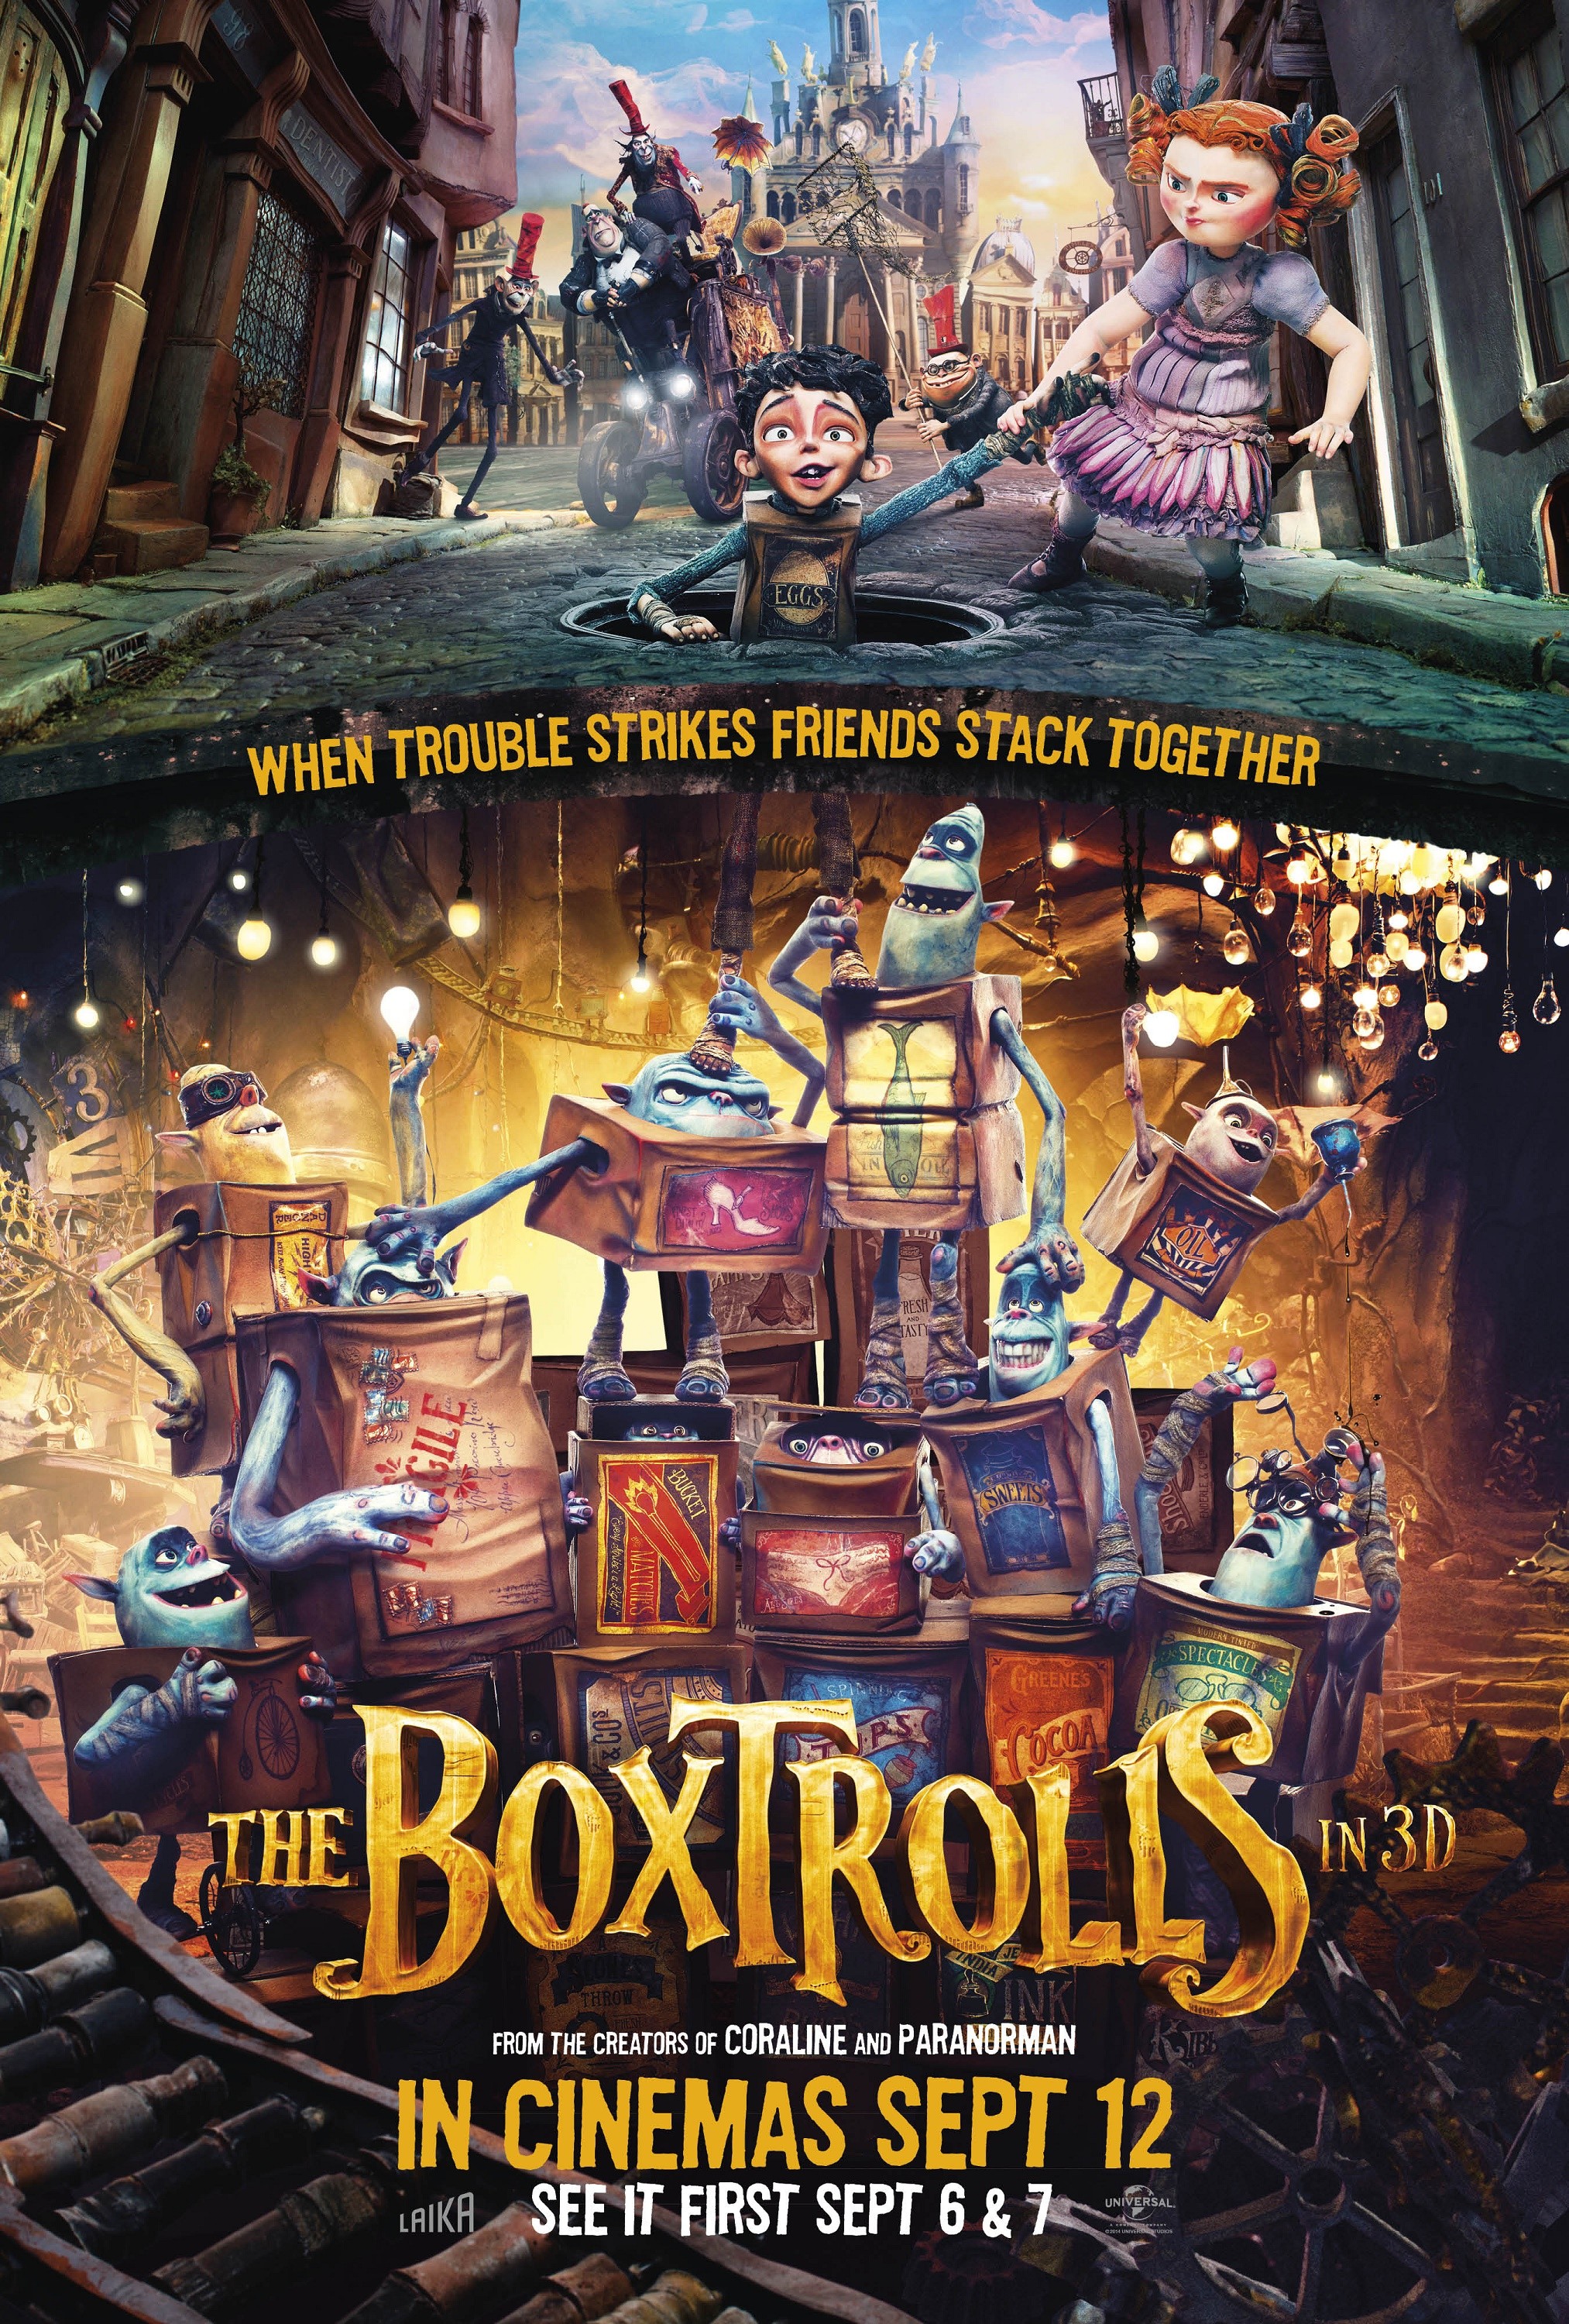 Mega Sized Movie Poster Image for The Boxtrolls